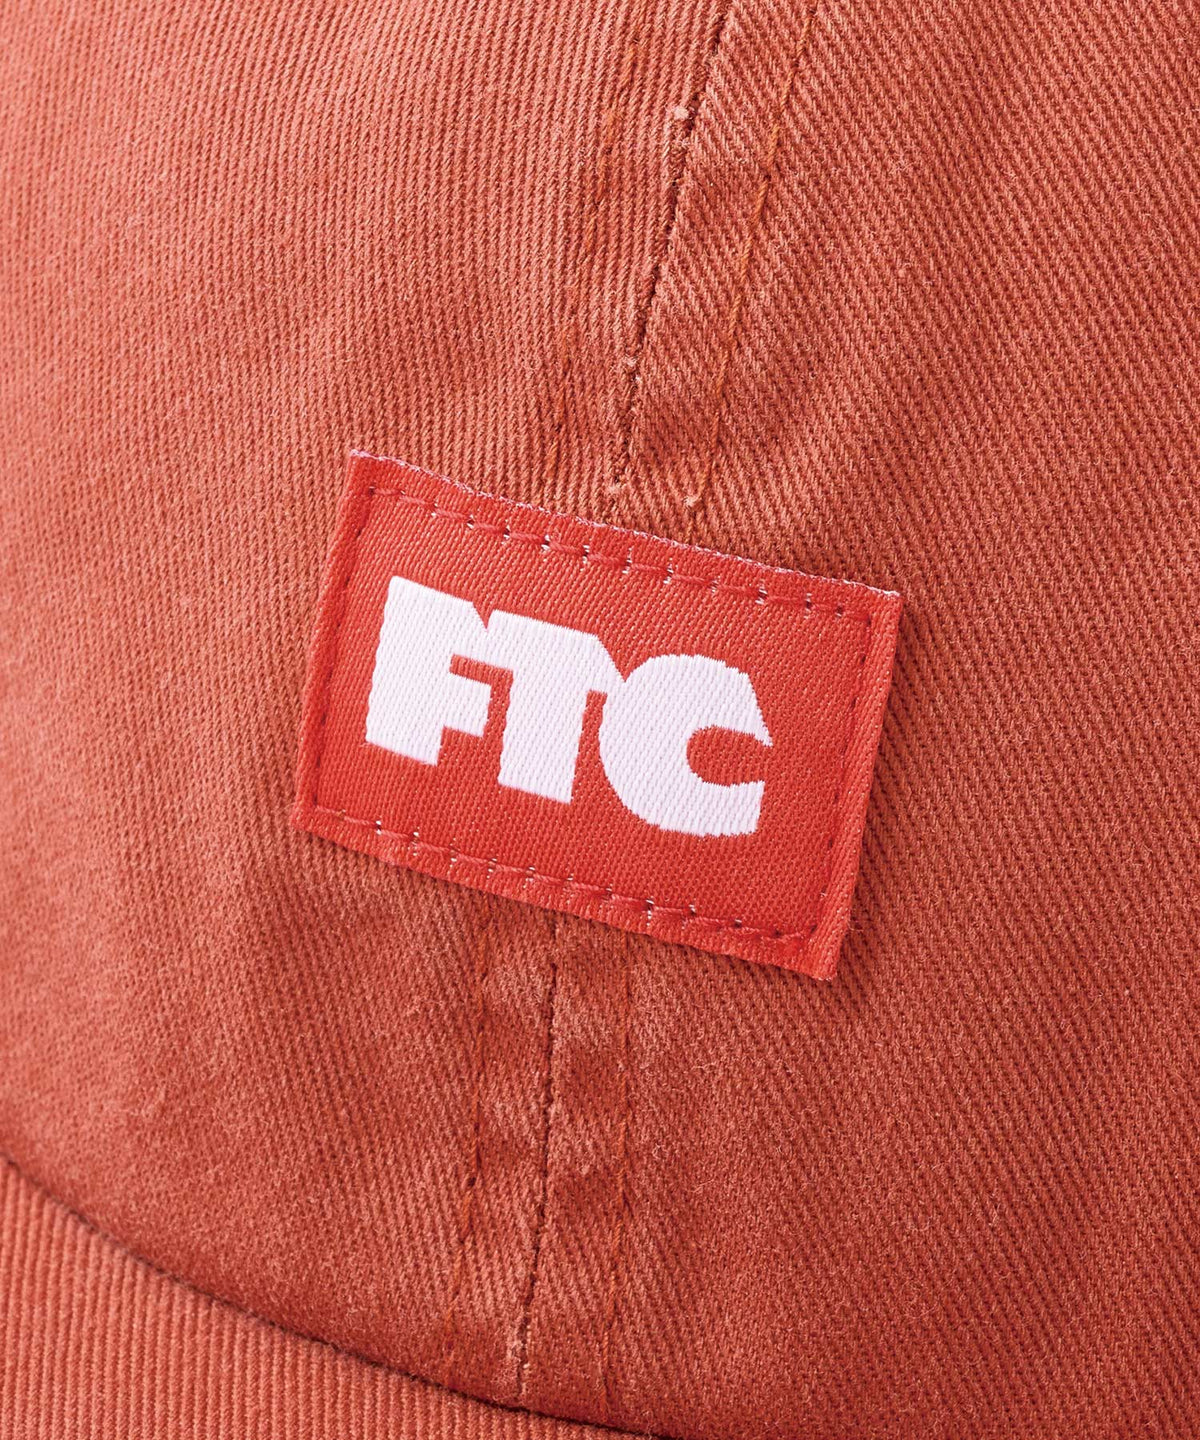 FTC SMALL OG 6 PANEL TWILL HAT